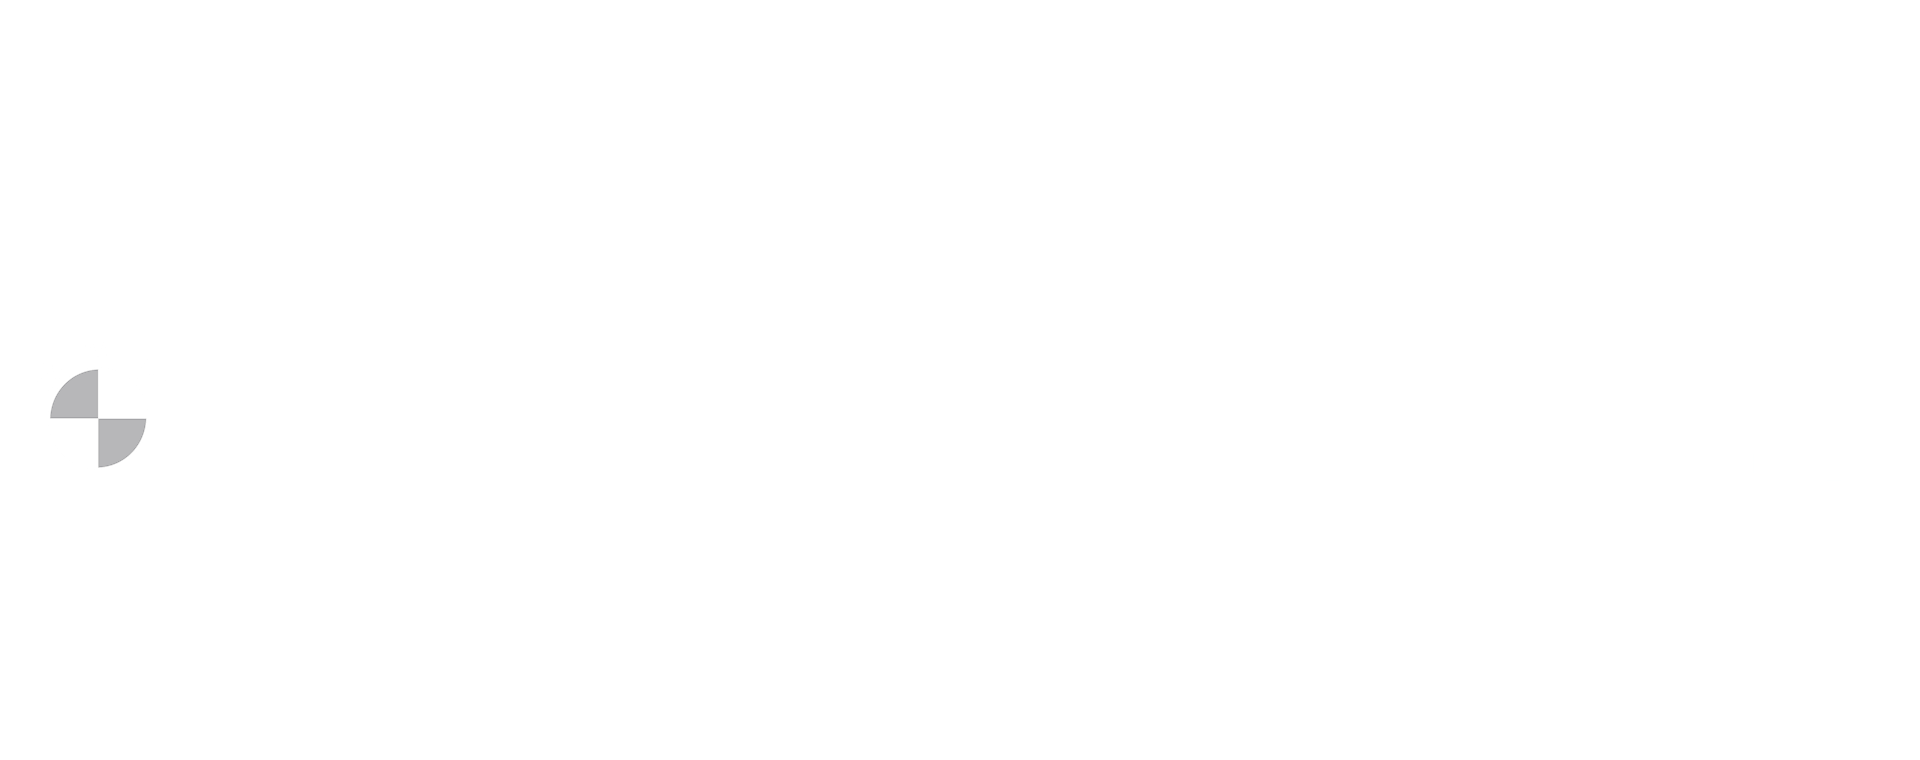 Easee car logos